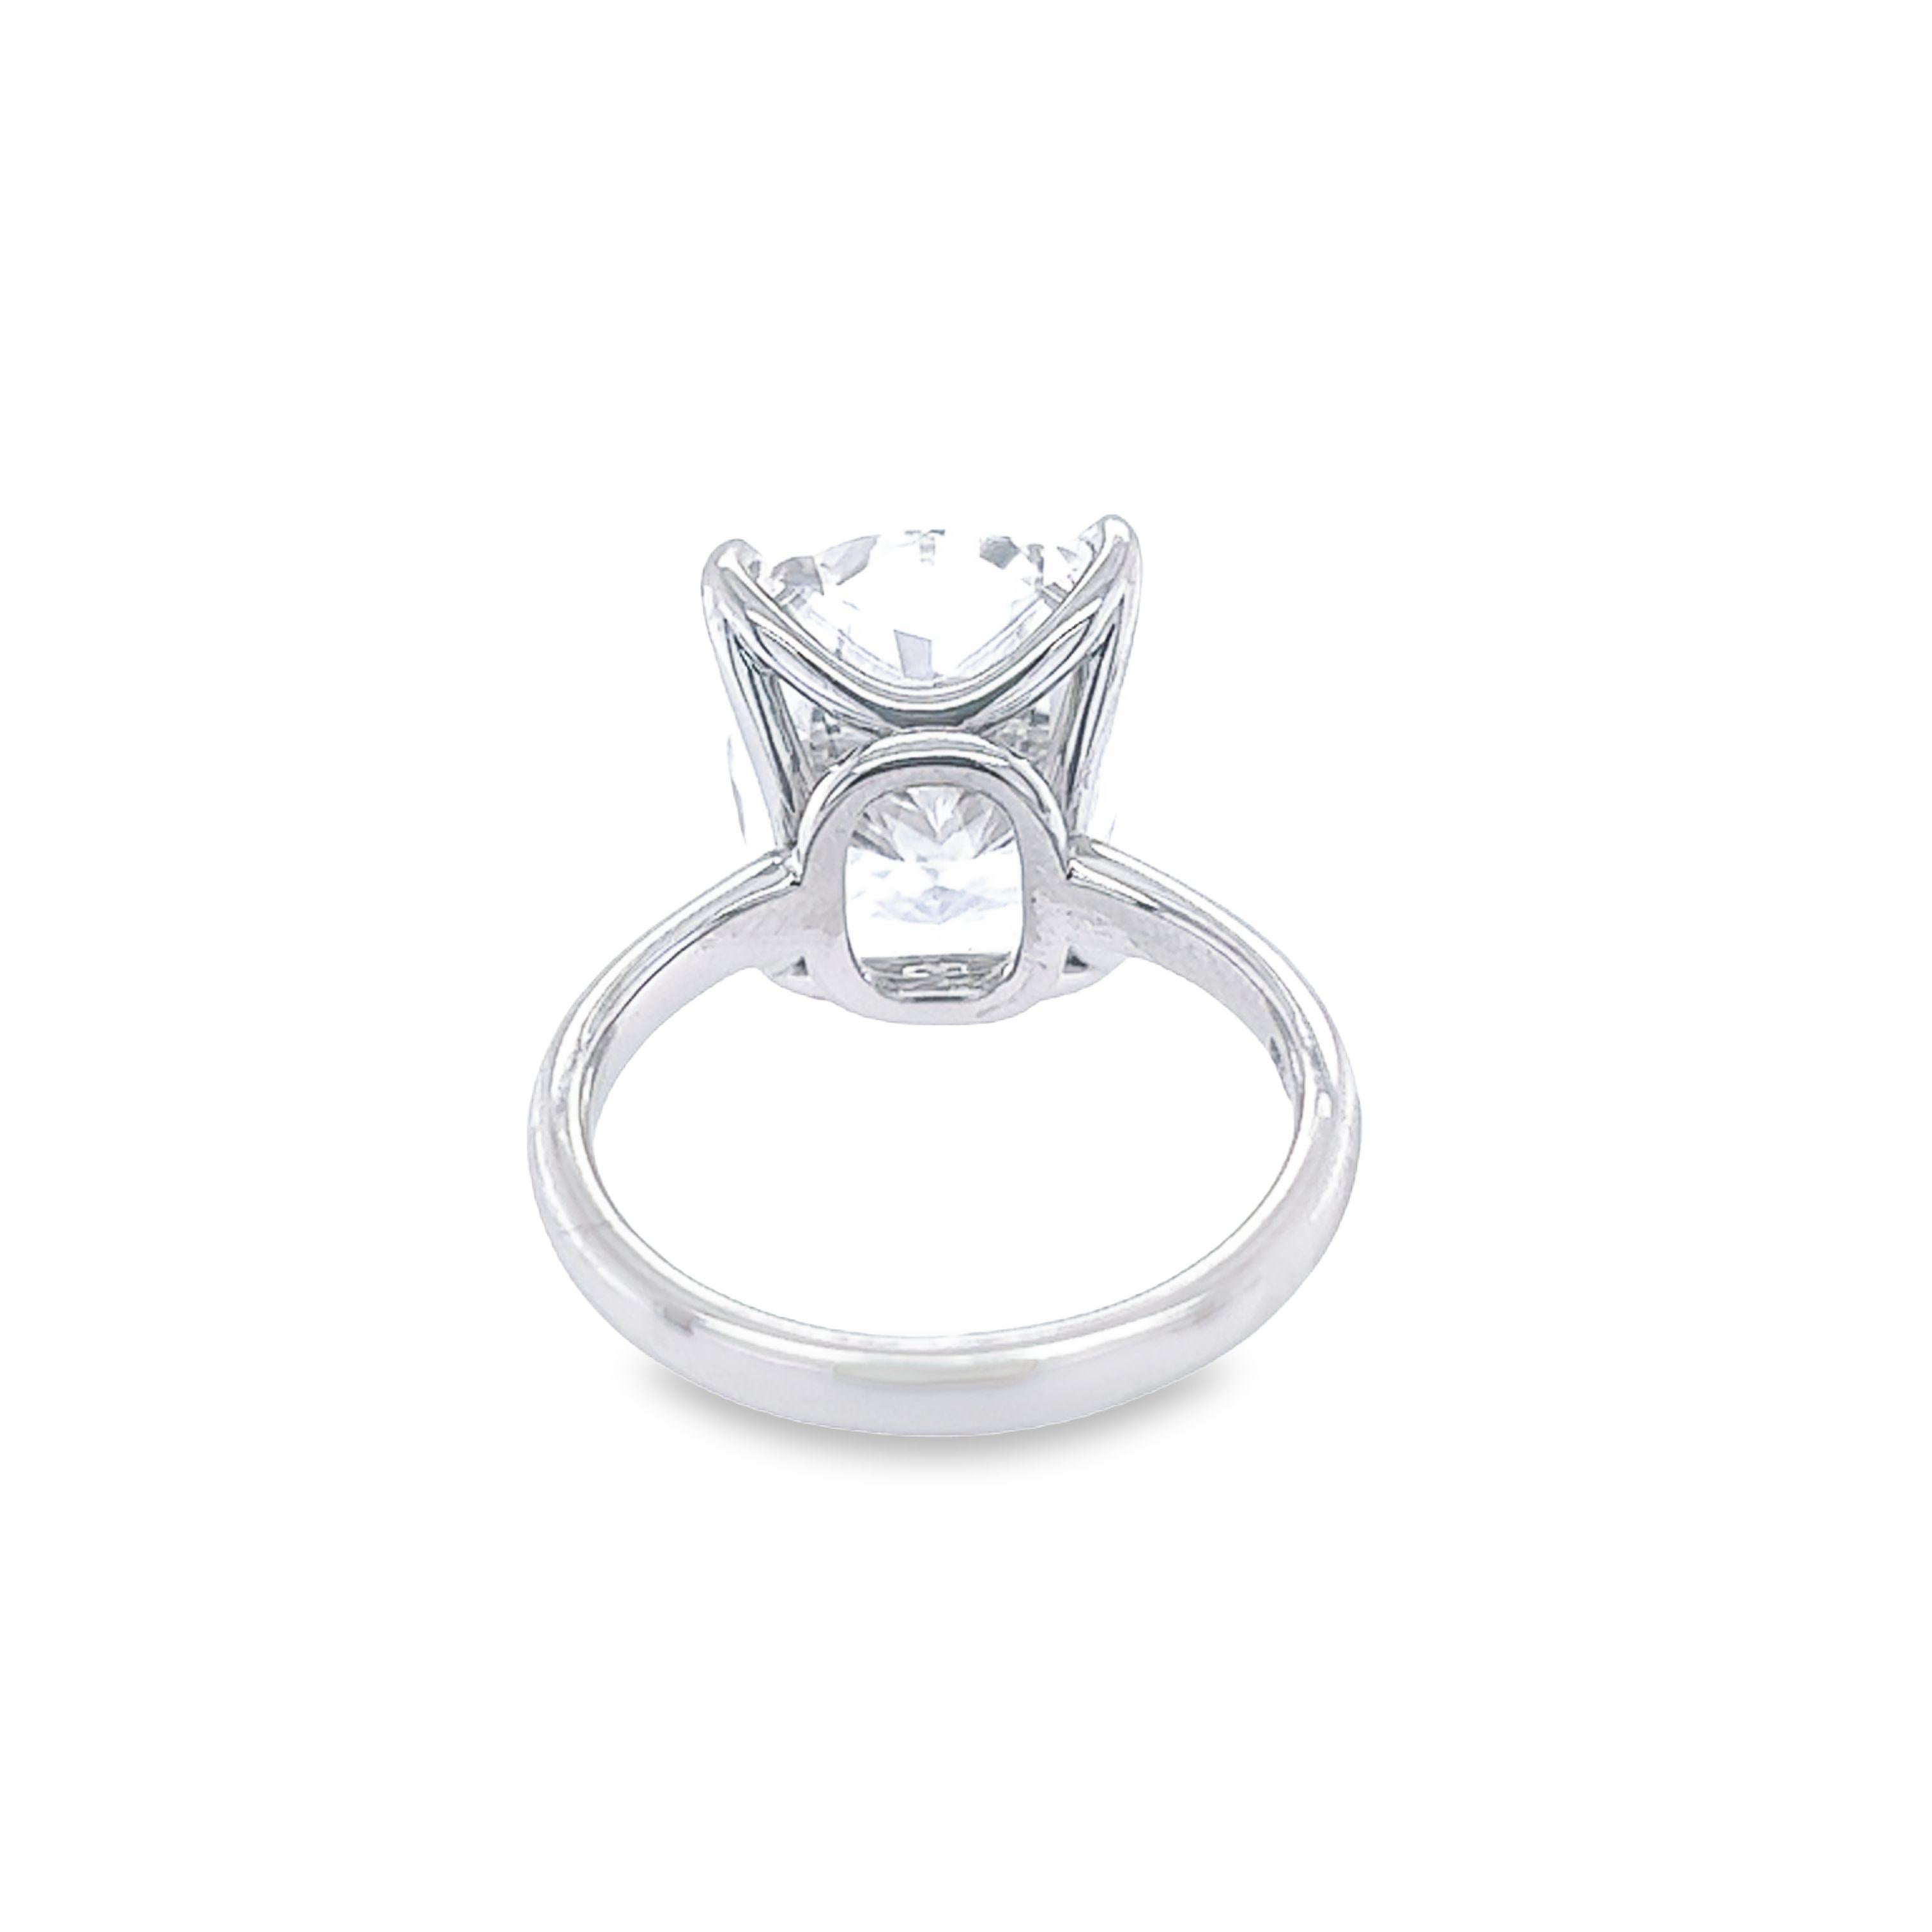 10 carat cushion cut diamond ring